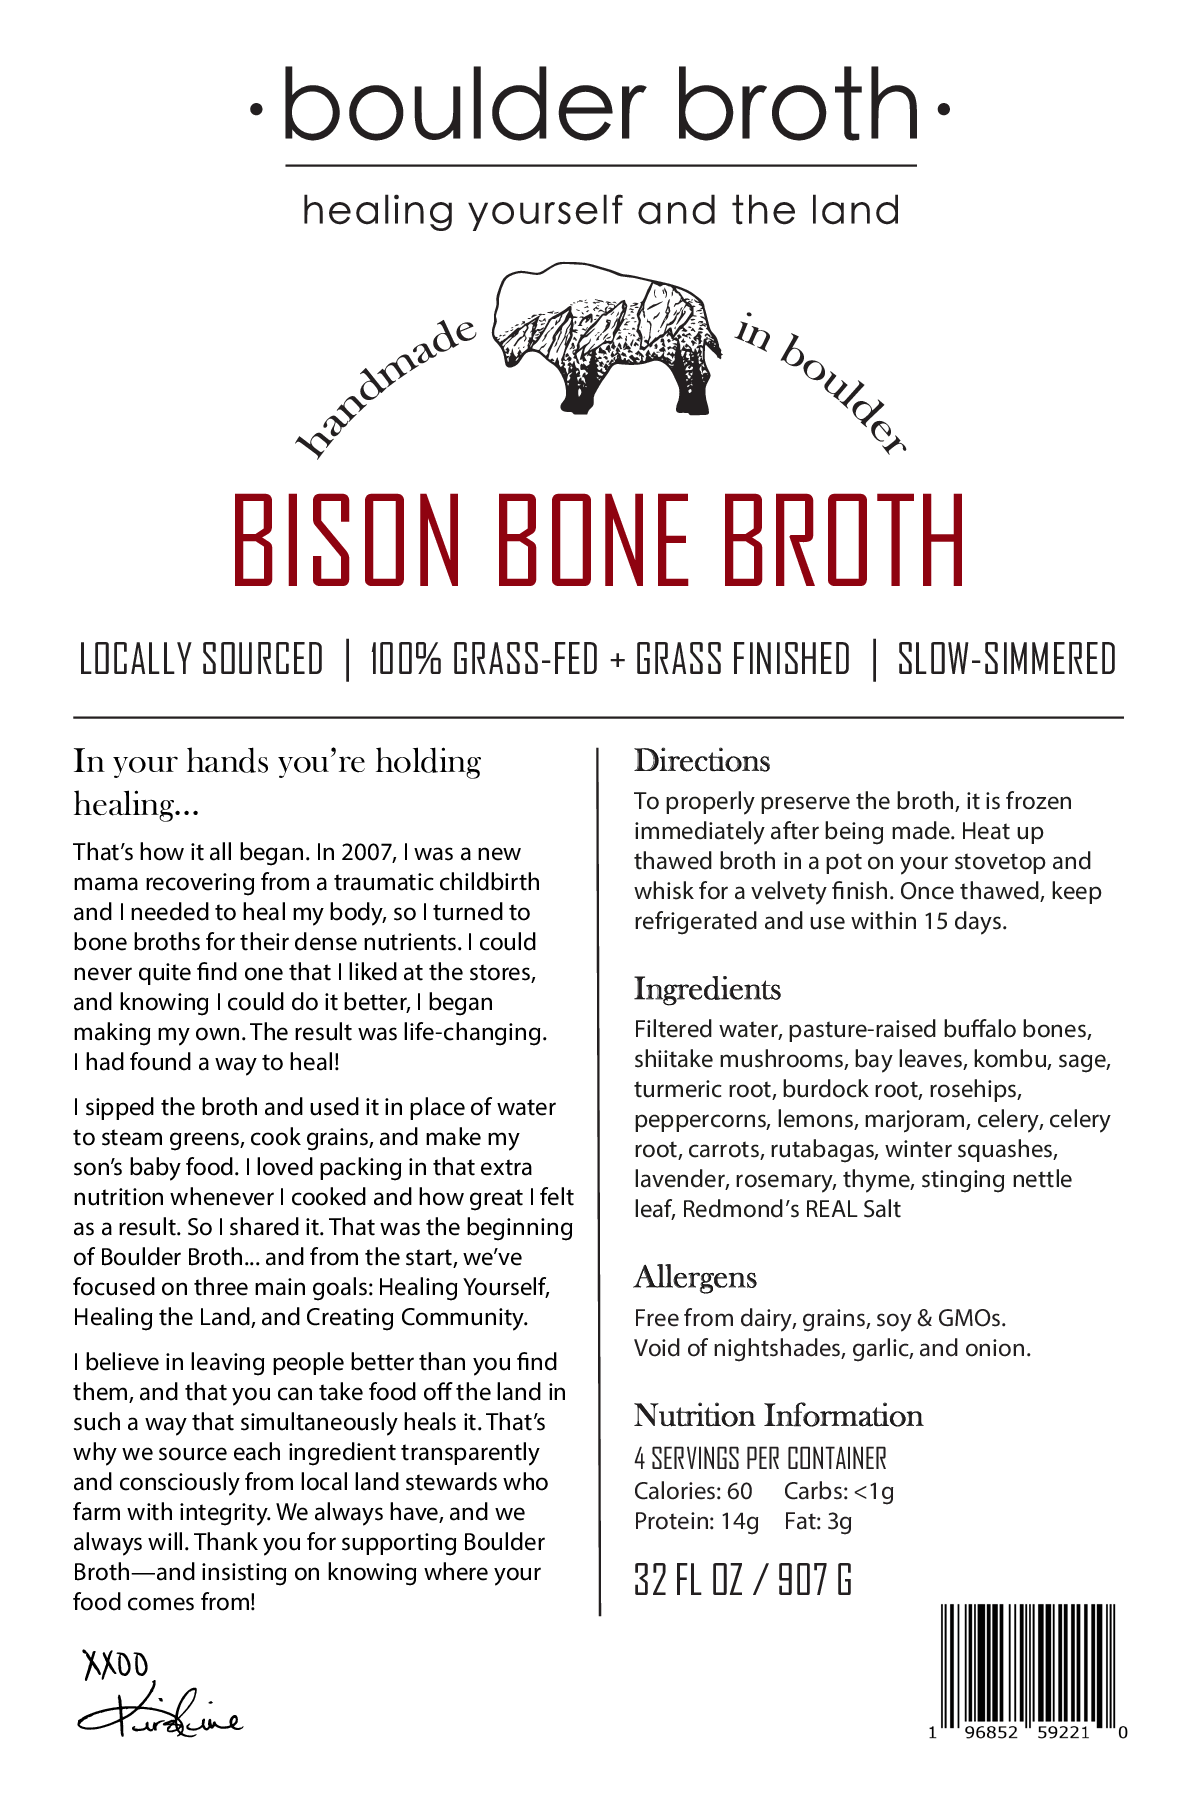 Bison Bone Broth